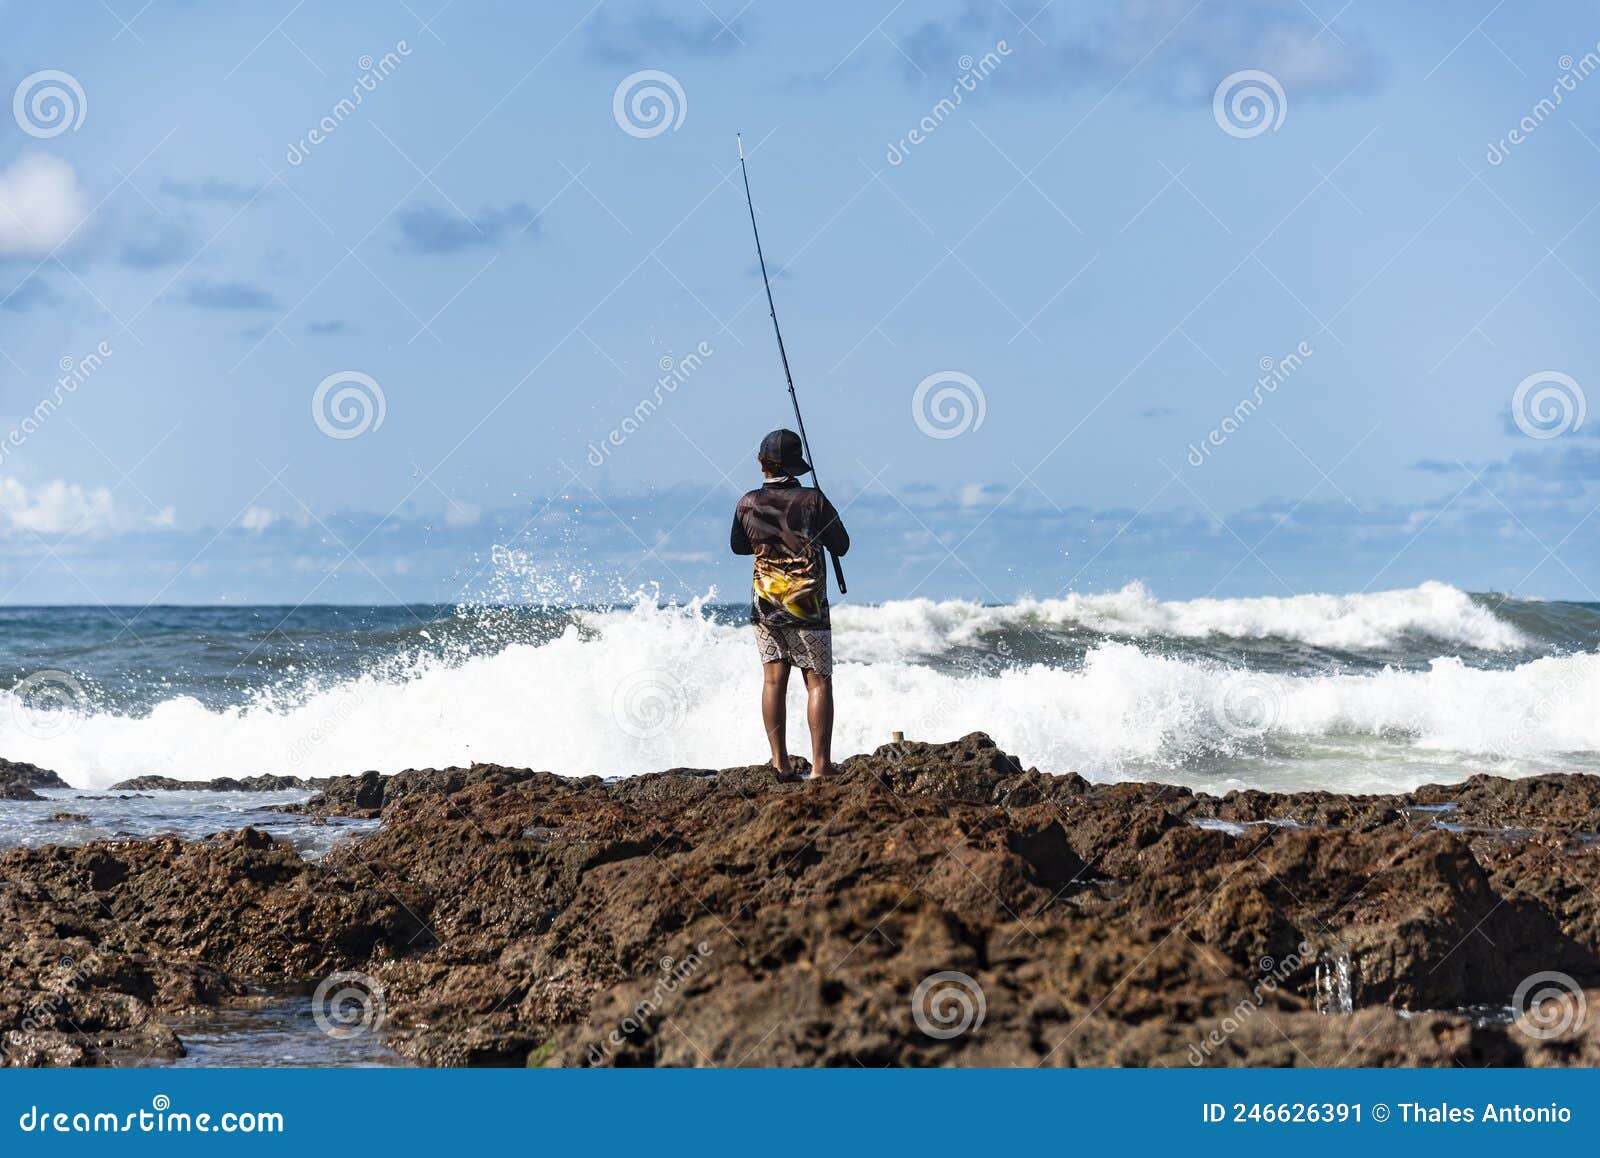 https://thumbs.dreamstime.com/z/fishing-men-top-rocks-beach-fishing-pole-salvador-bahia-brazil-october-fishing-men-top-rocks-rio-246626391.jpg